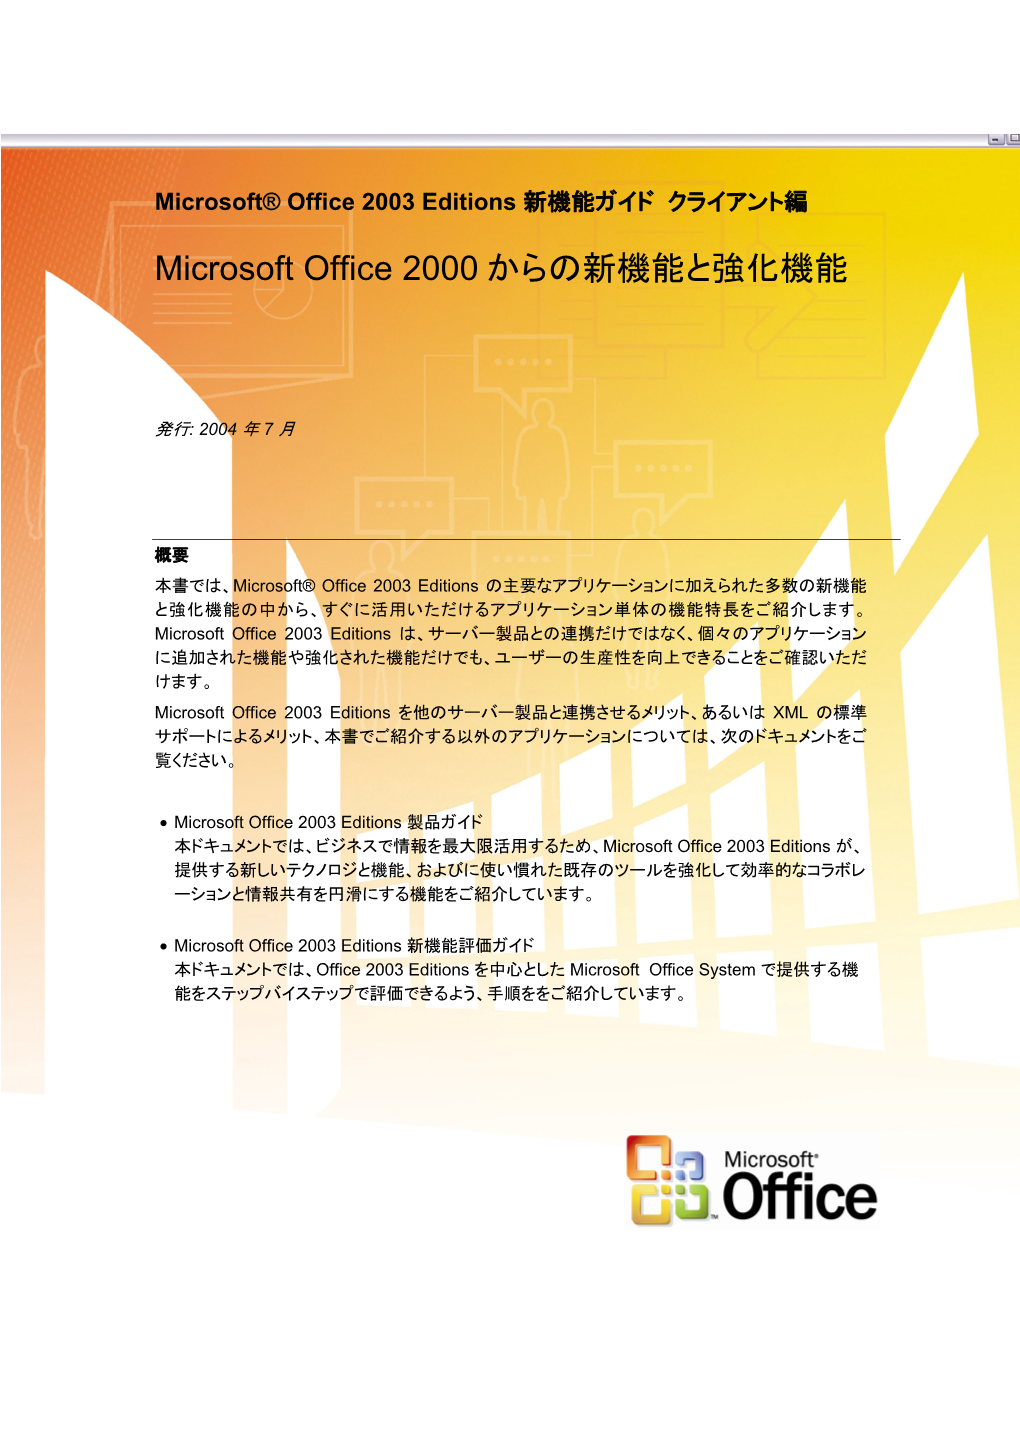 Microsoft Office 2000 からの新機能と強化機能